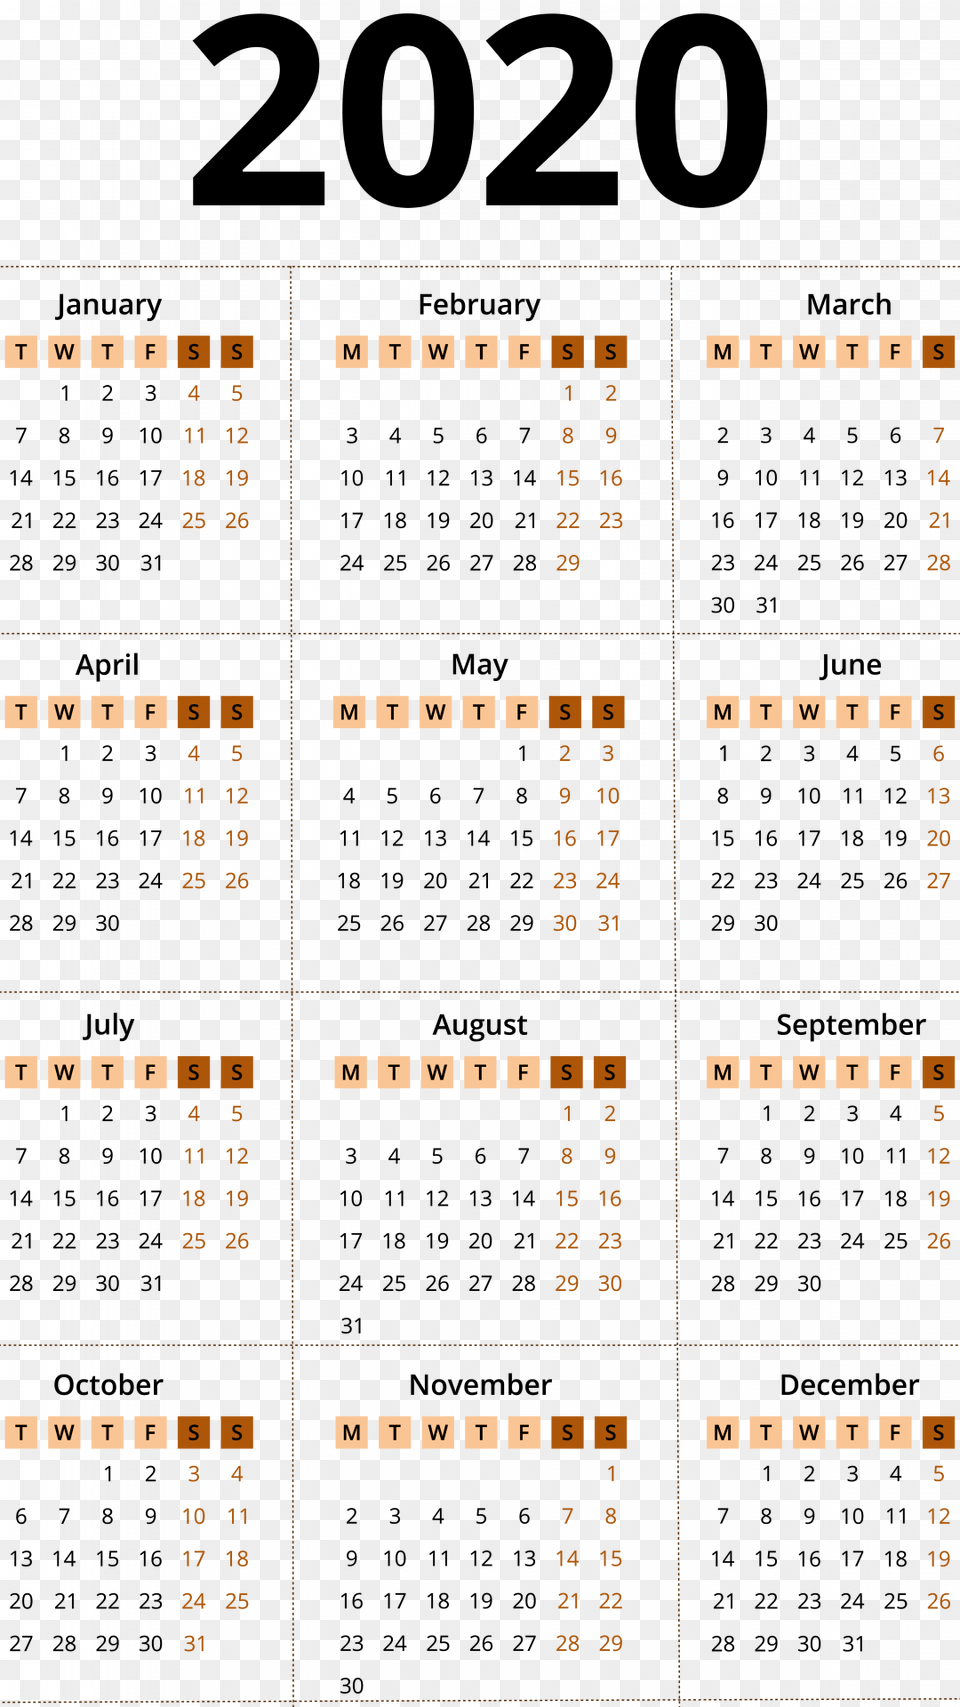 2020 Calendar Transparent Images All Chinese Lunar Calendar 2020, Text, Scoreboard Png Image